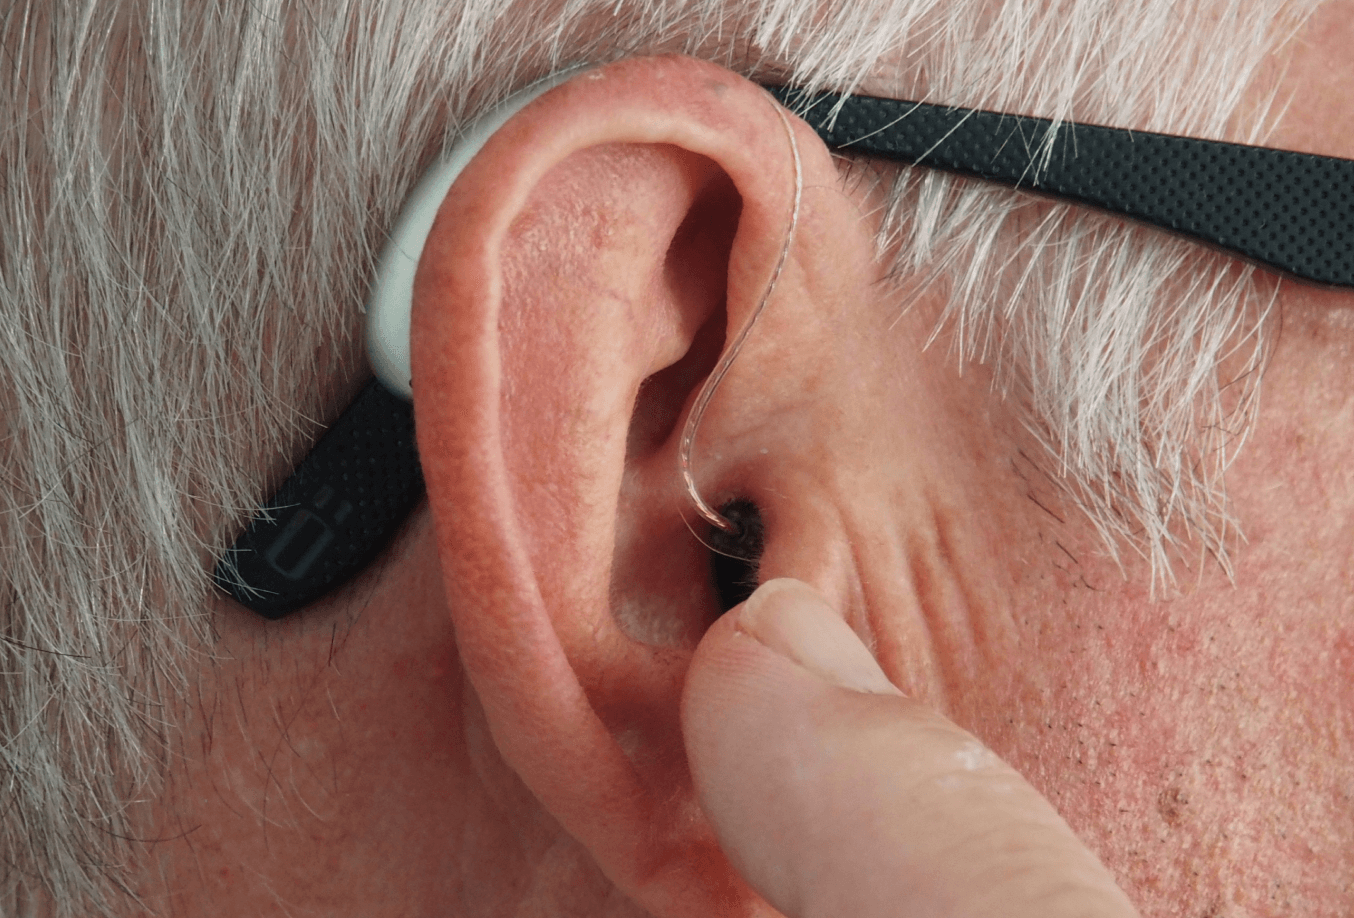 Elderly individual adjusting hearing aid